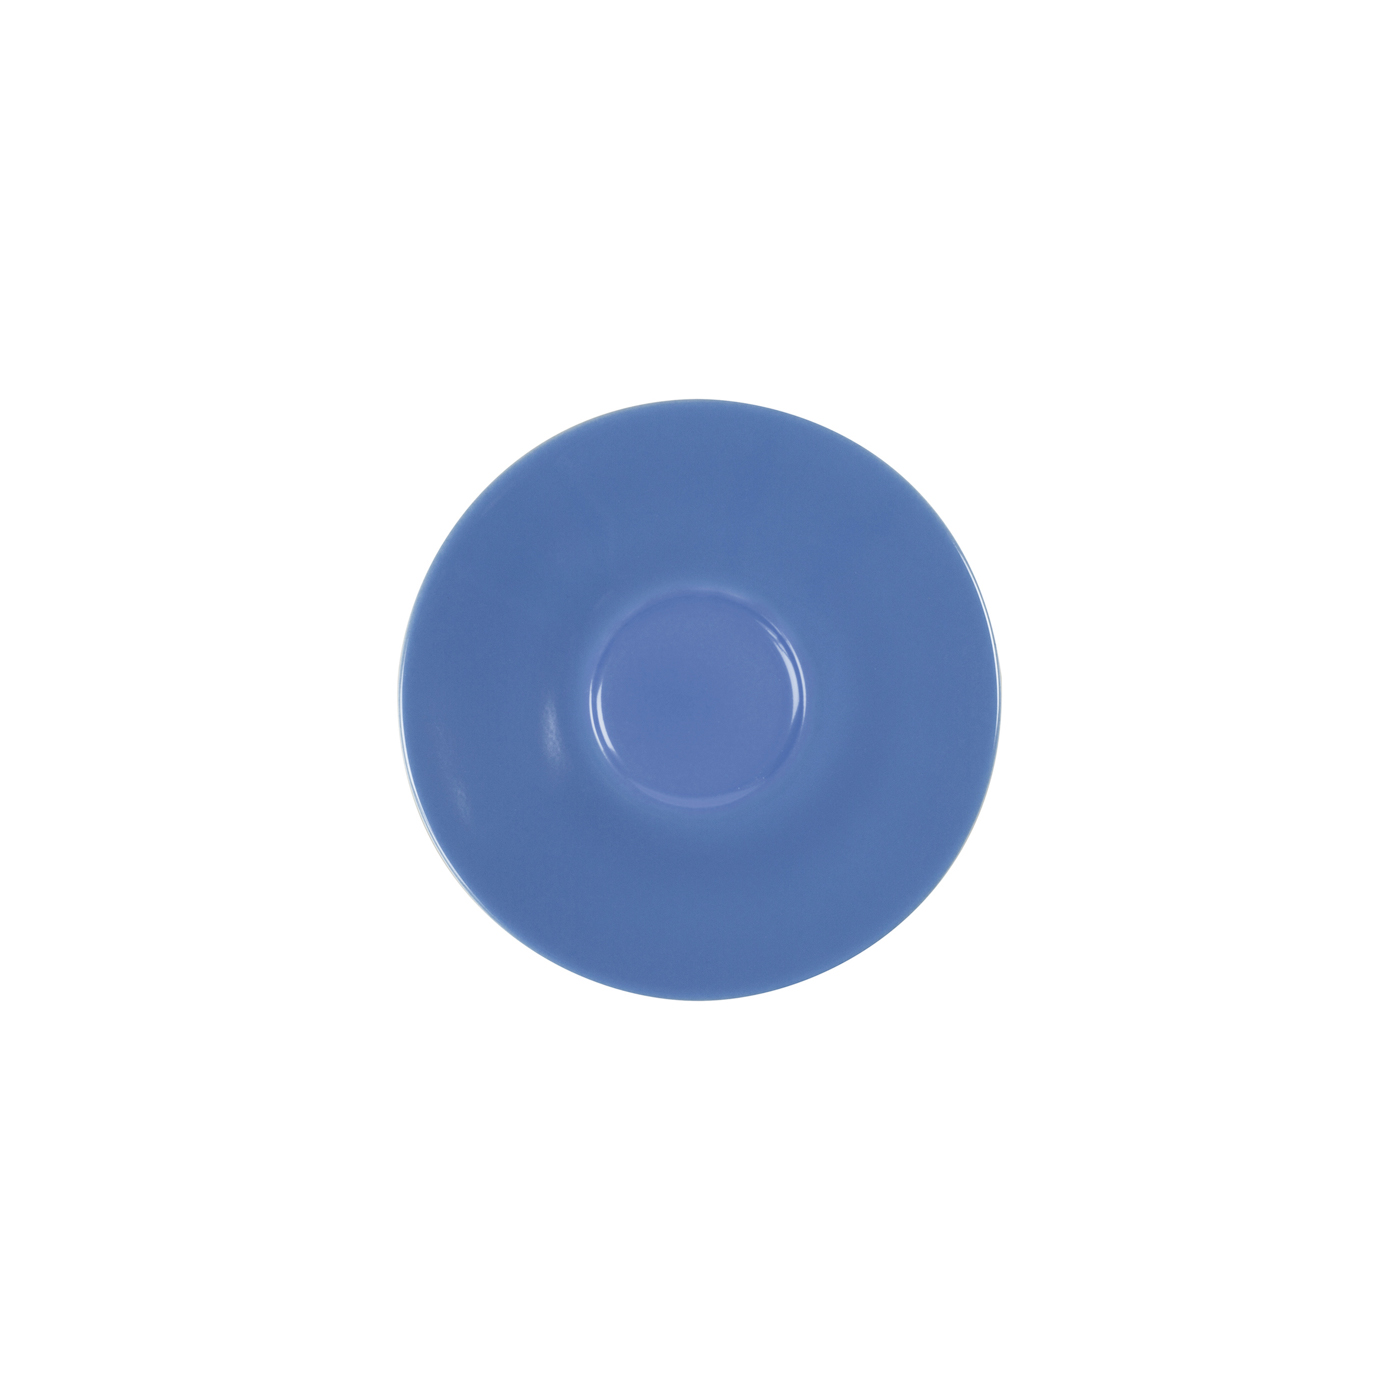 Kombi-Untertasse 16 cm, Farbe: polar blue / polarblau